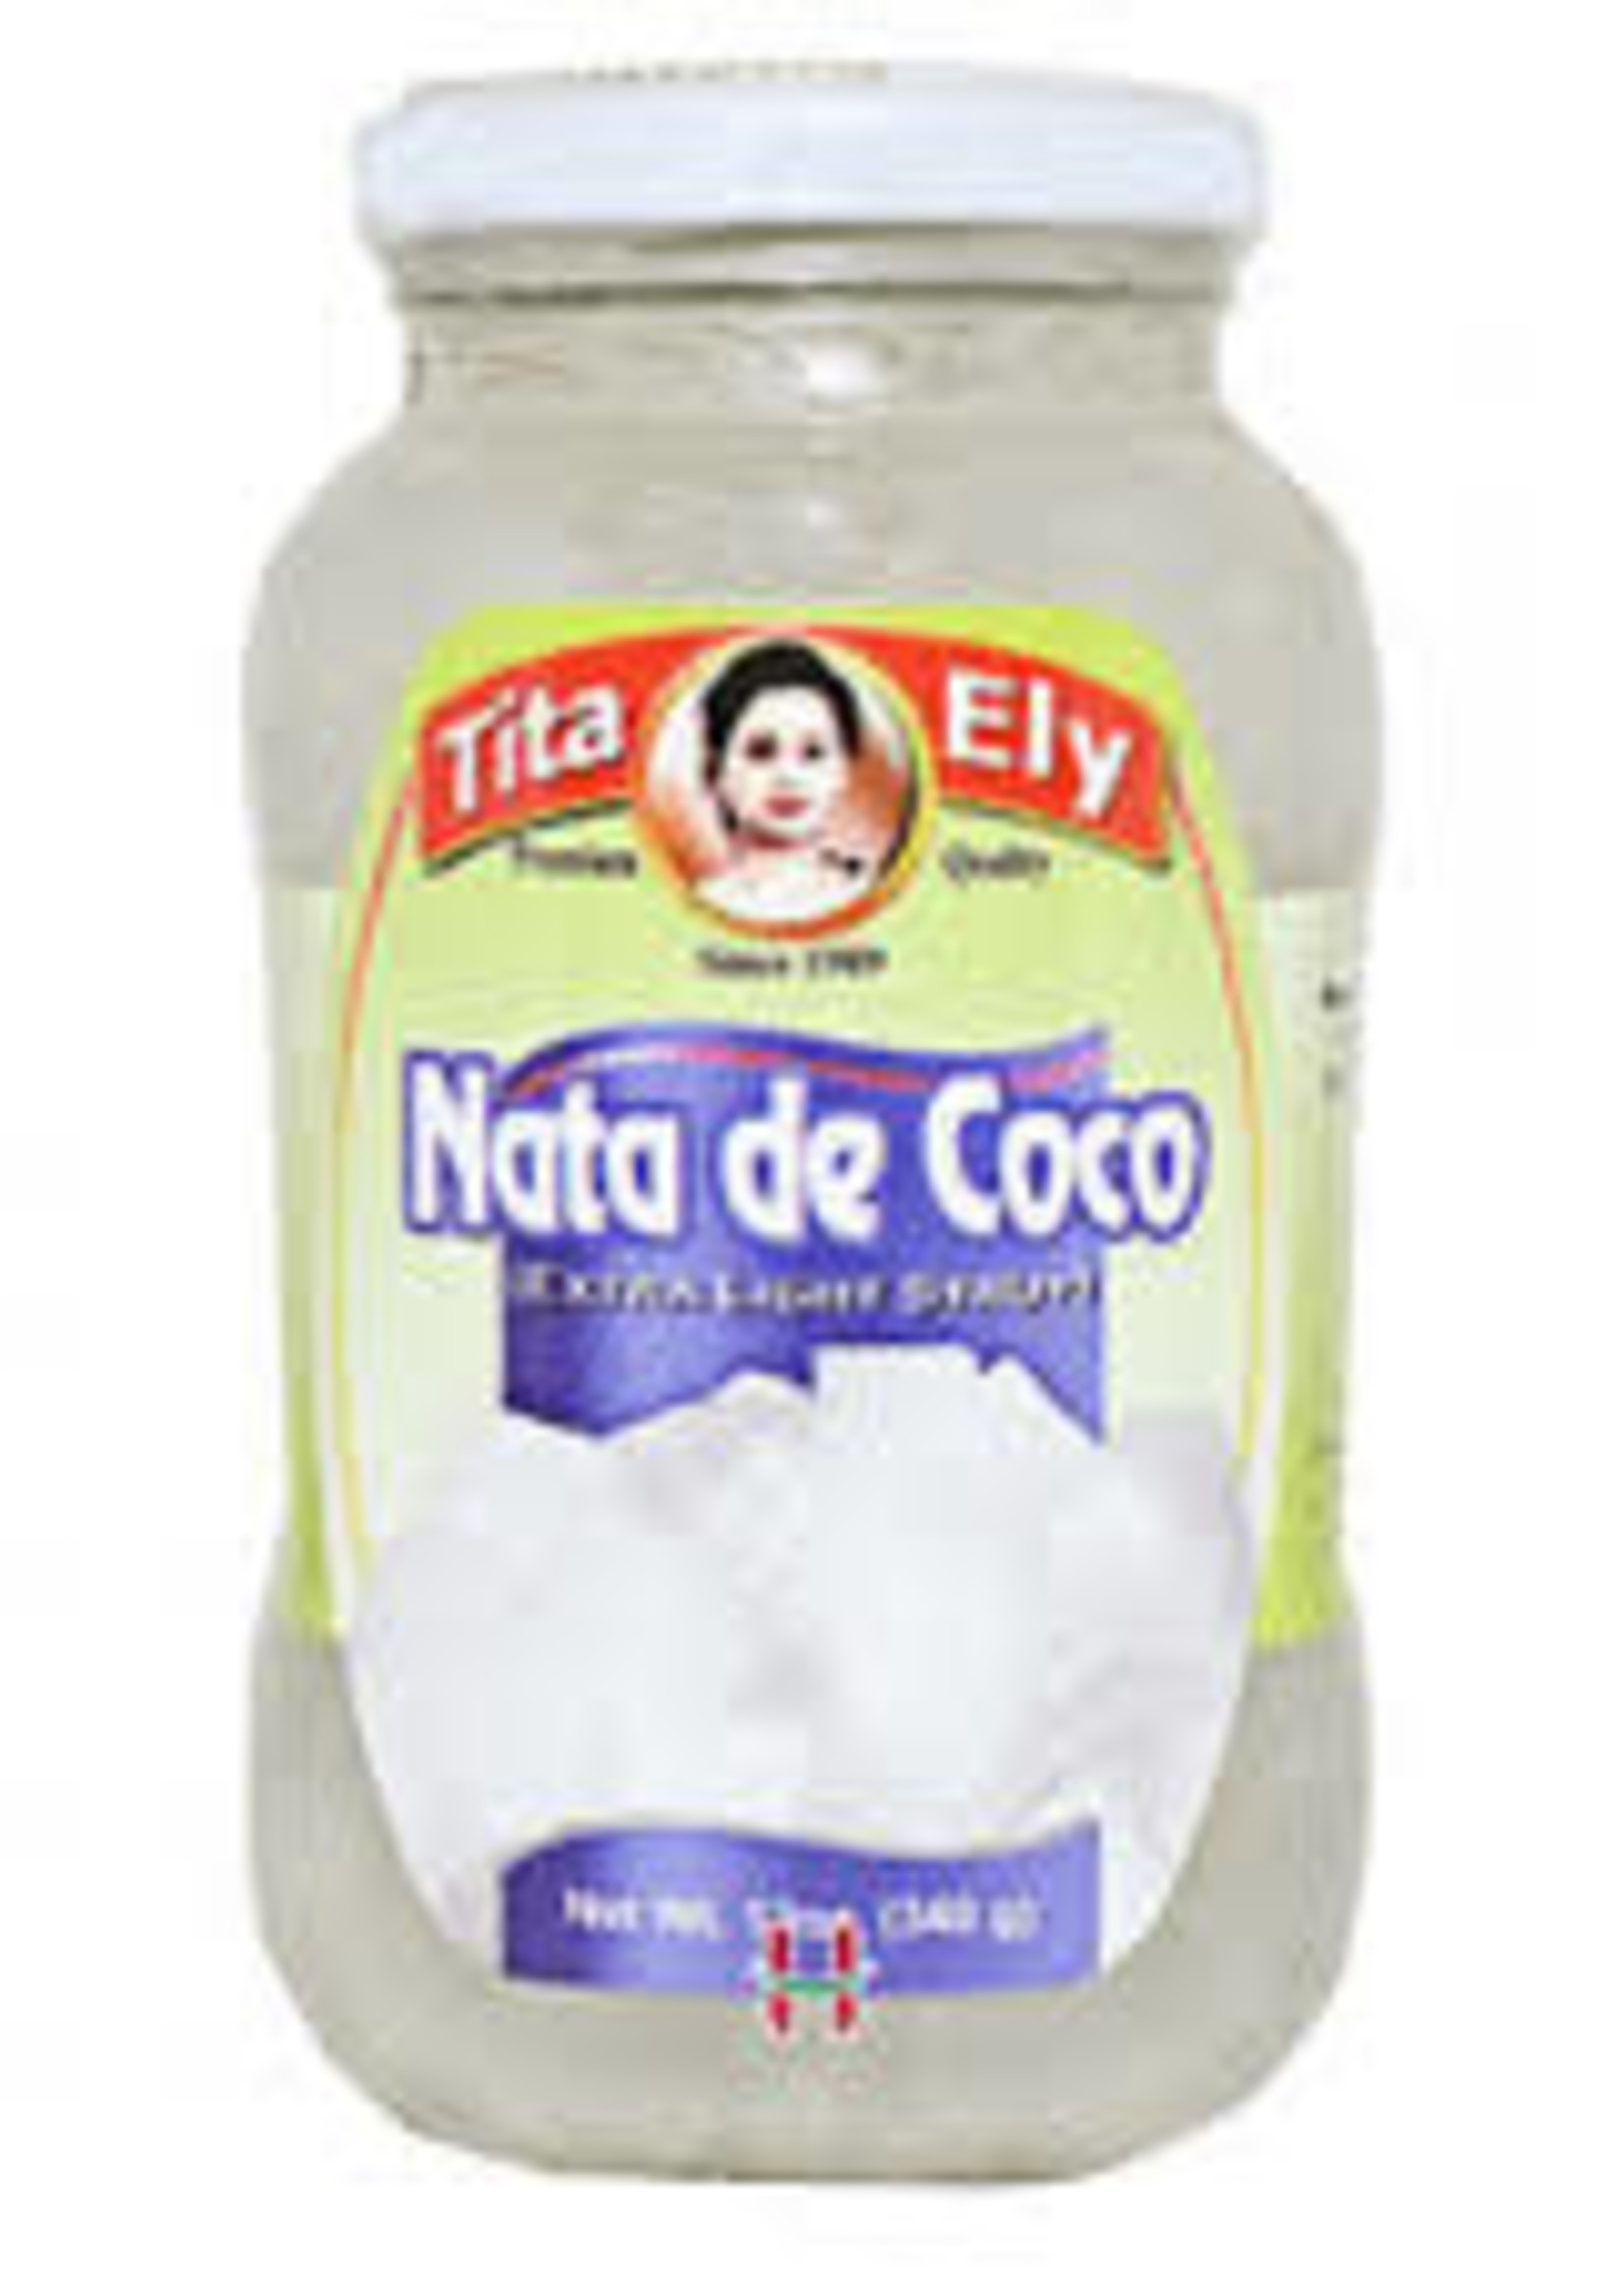 Nata de coco white 340g Tita Ely